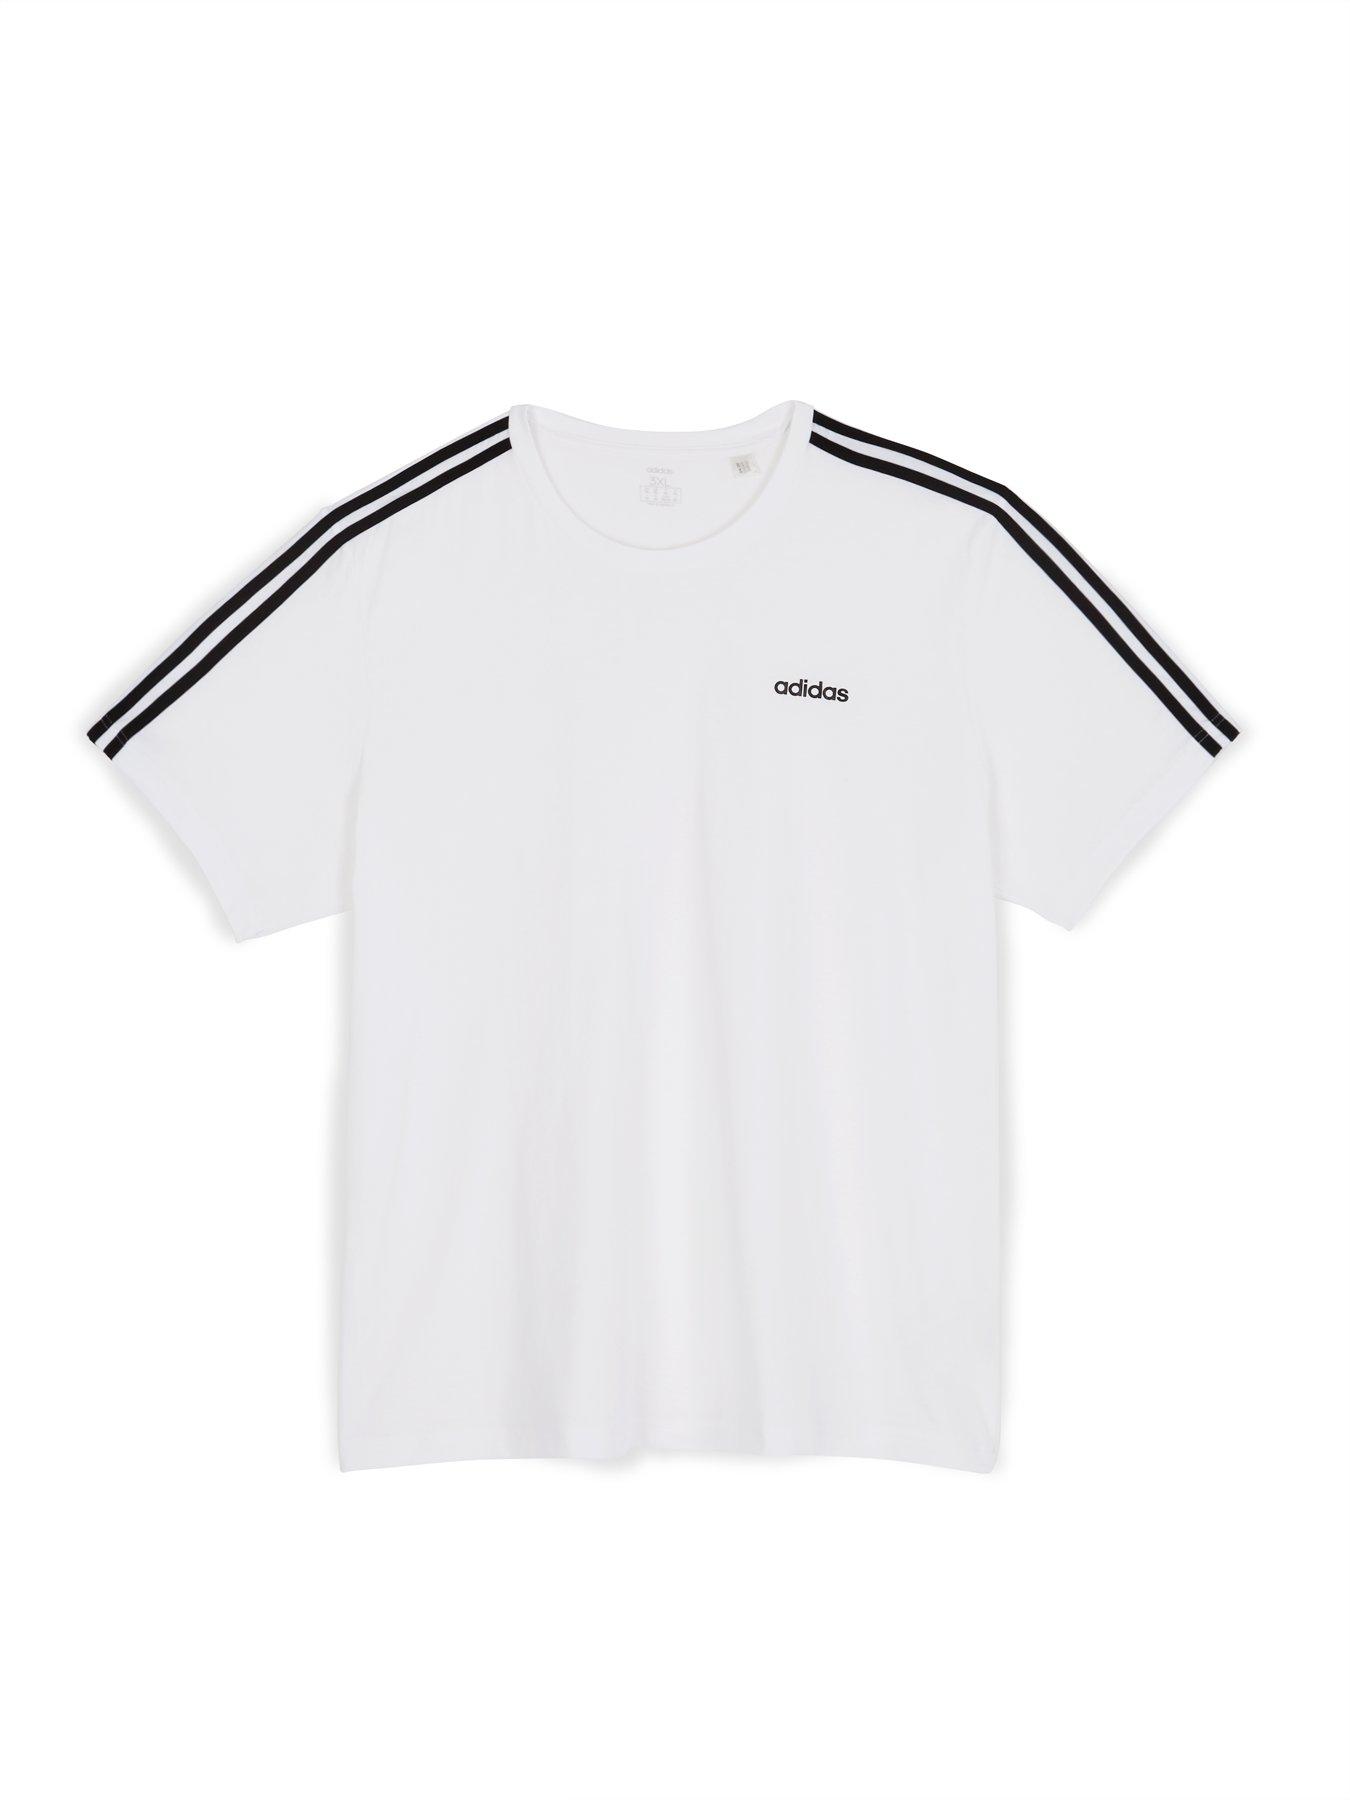 3XL | Adidas | T-shirts \u0026 polos | Sportswear | Men | www.very.co.uk